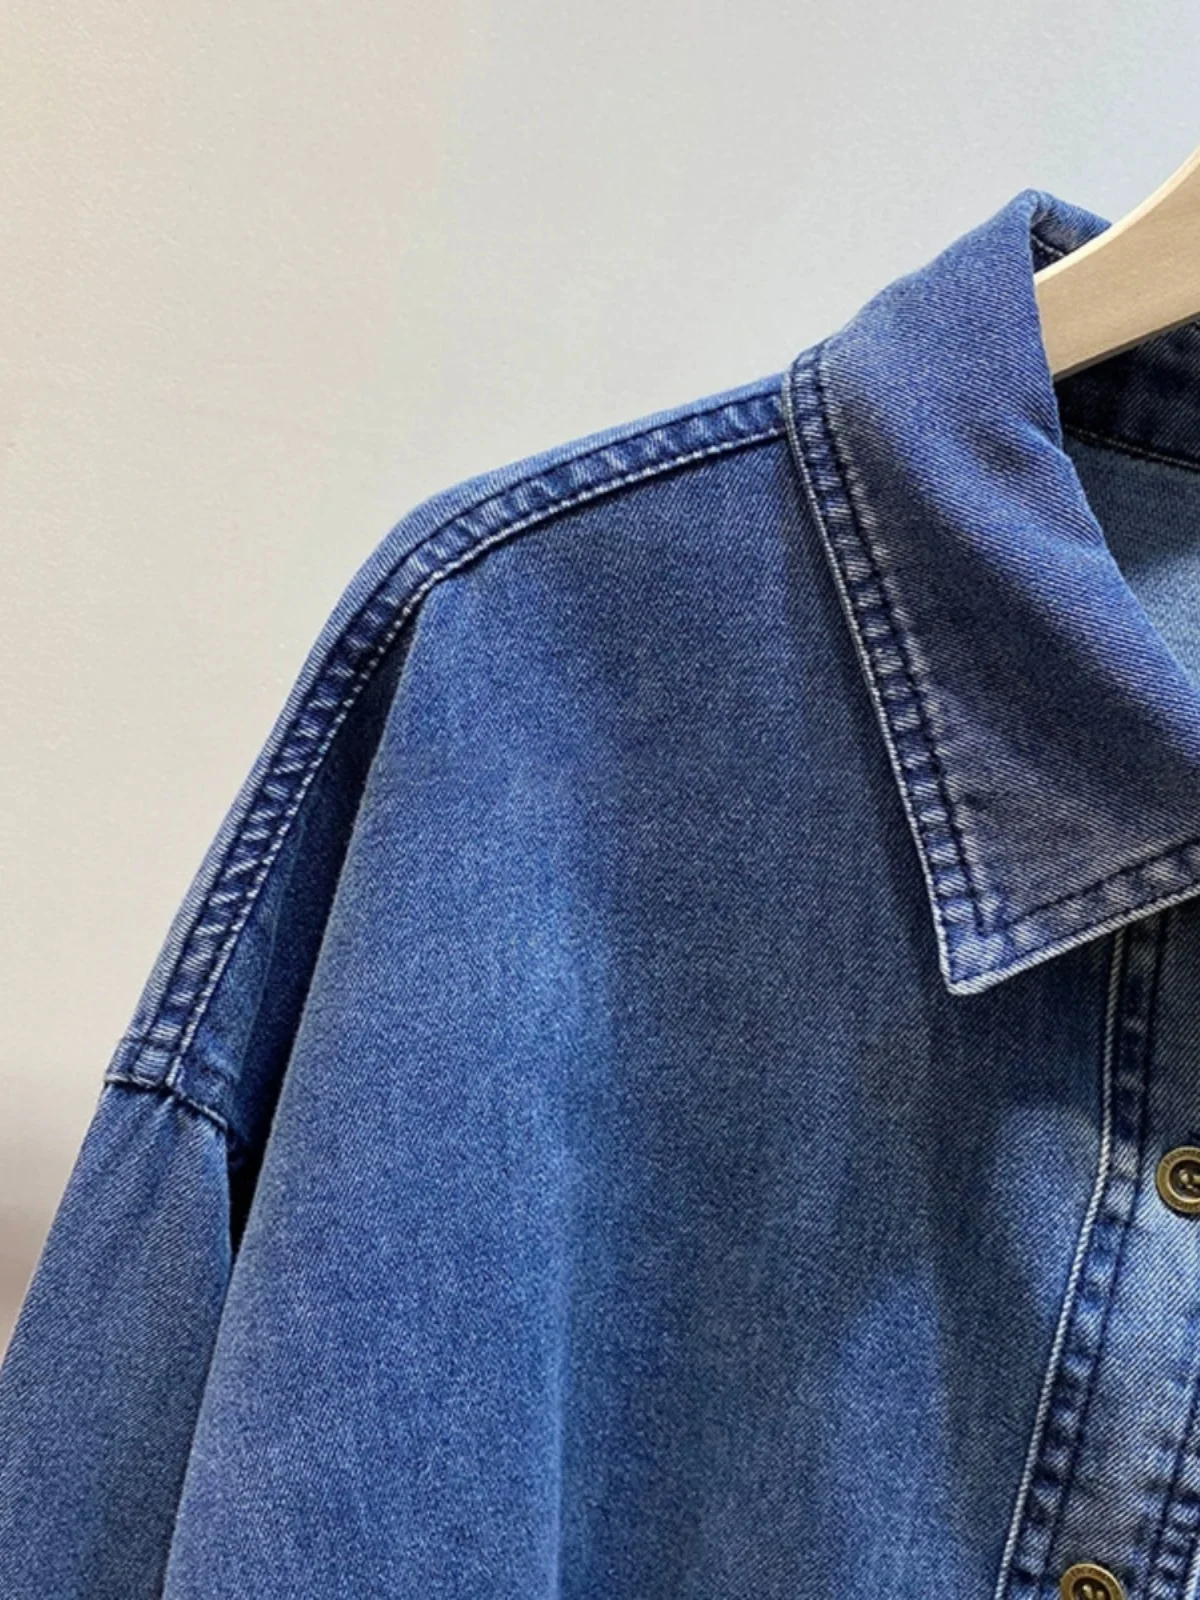 Denim Shirt Long Sleeve PoloCollar Coat Women's Washed Cotton Blue Autumn and Winter Top Single-Breasted Design Sense High-Grade